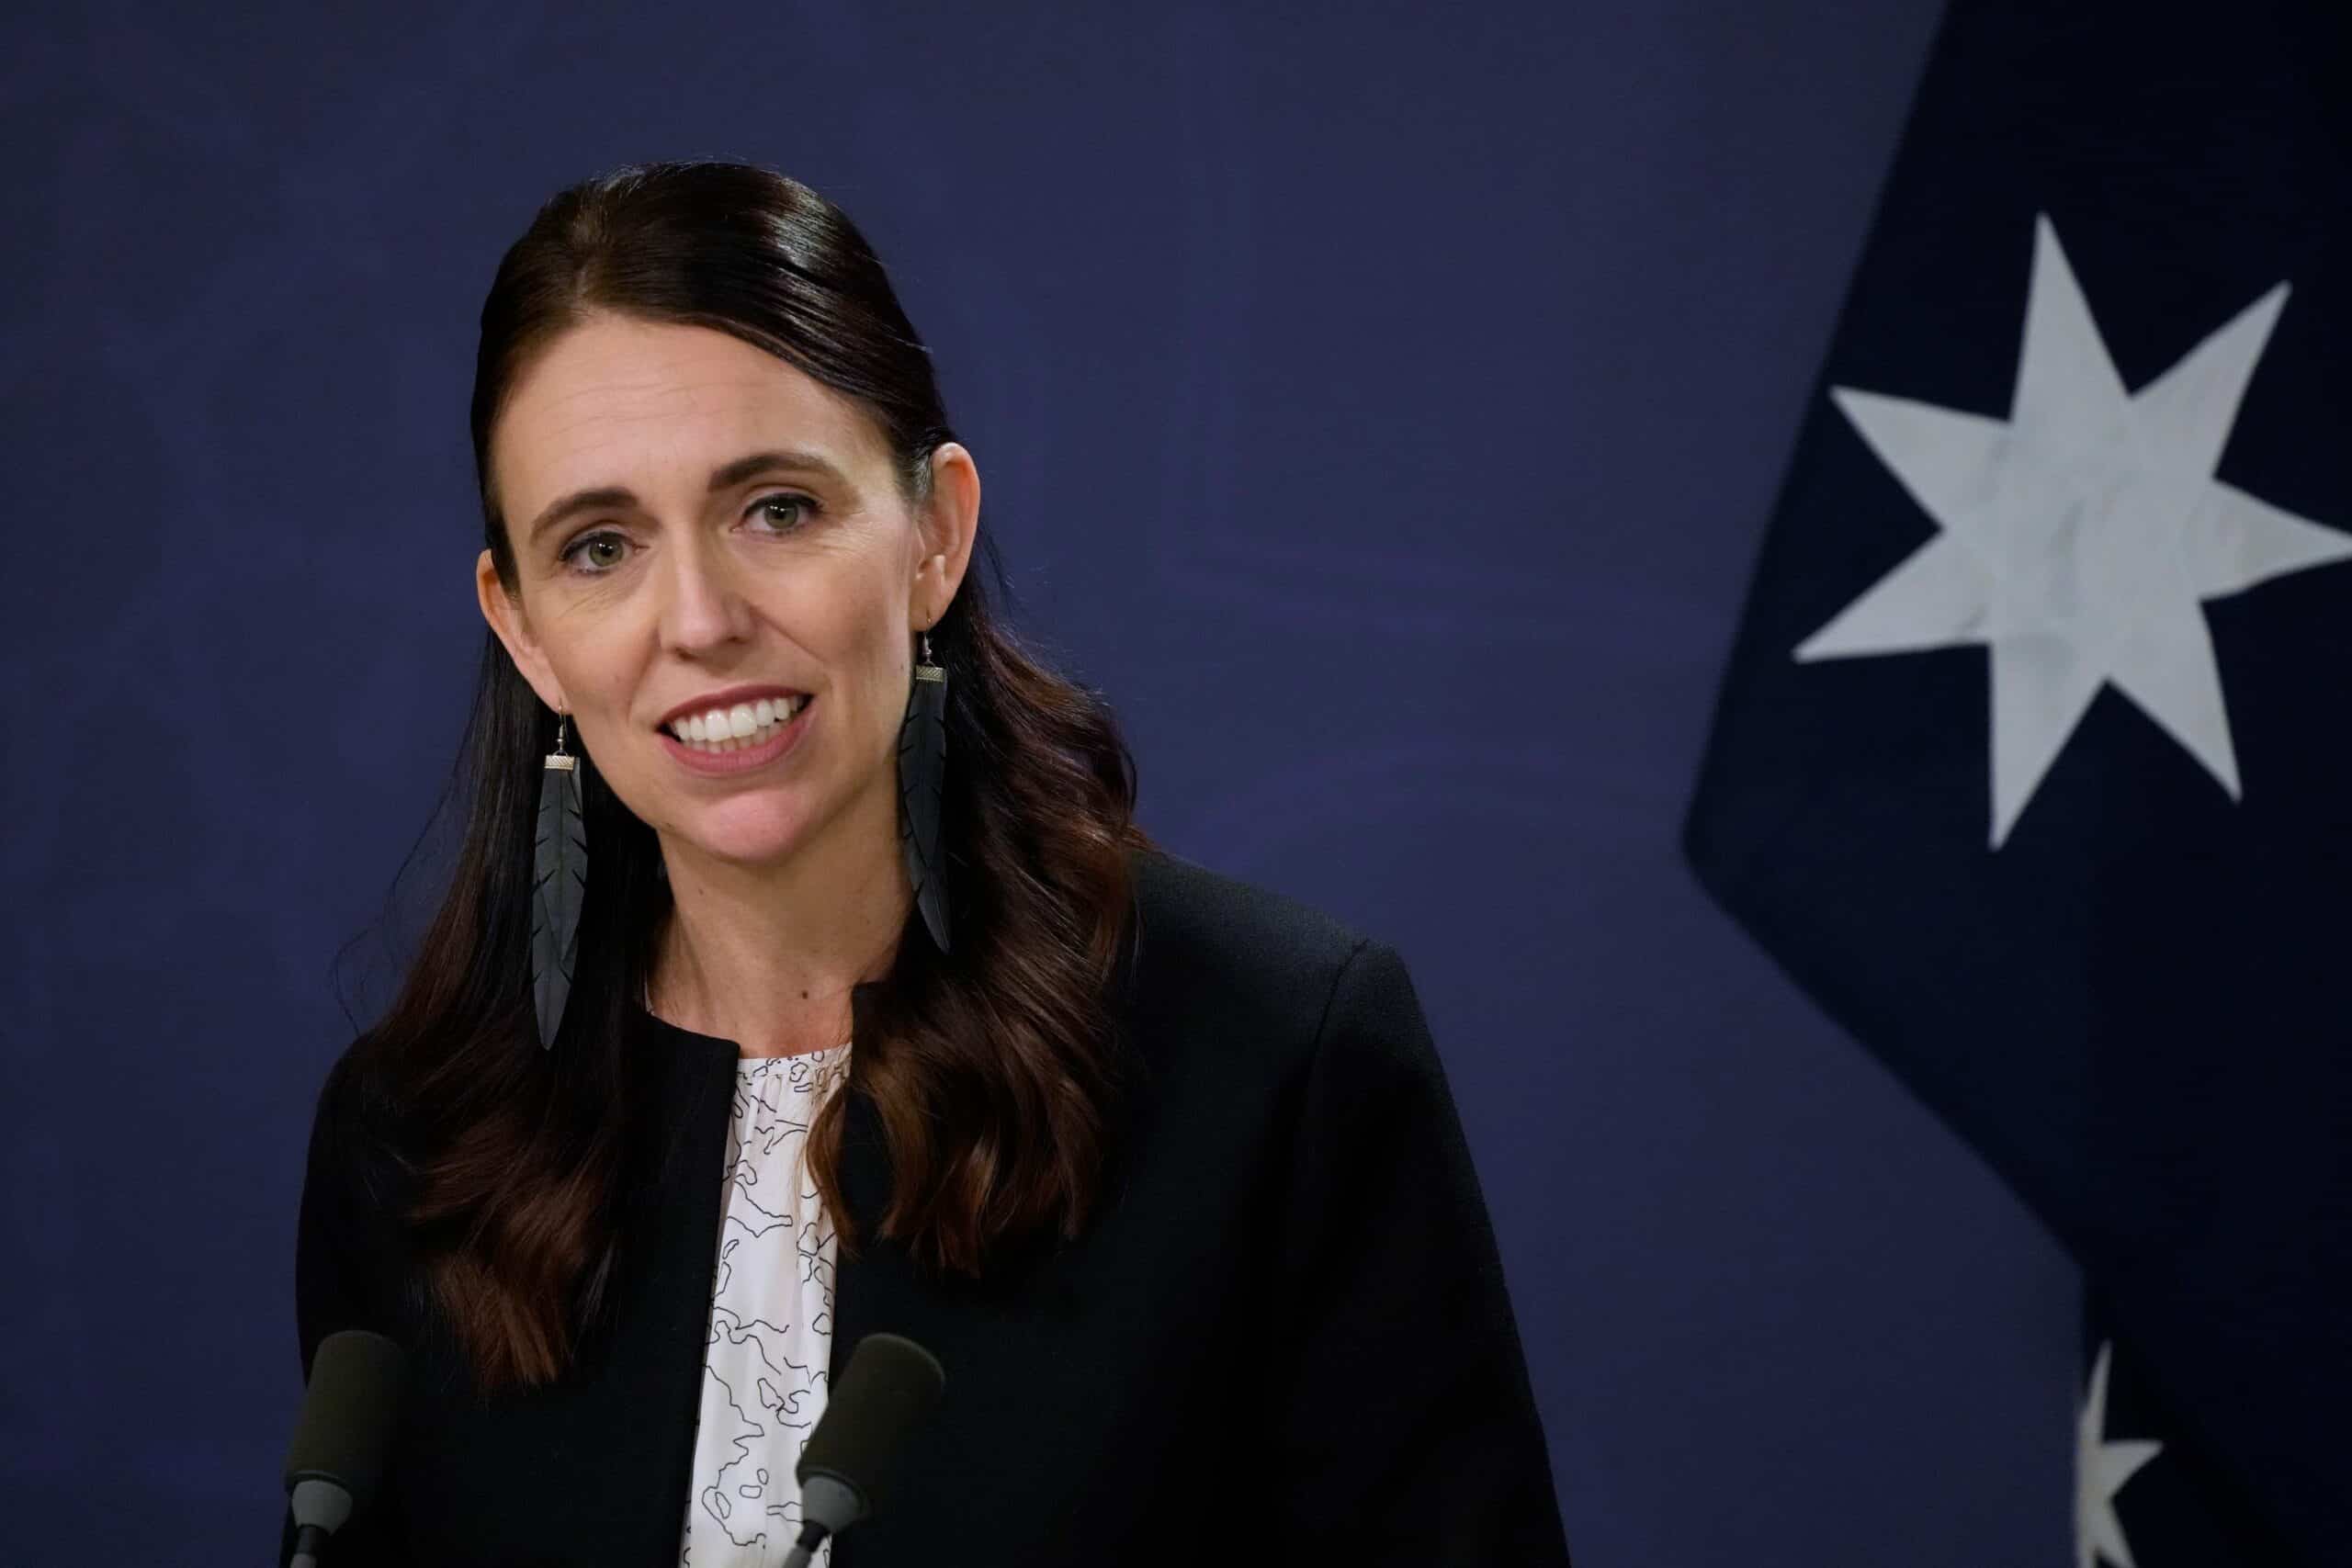 Jacinda Ardern announces shock resignation as New Zealand Prime Minister